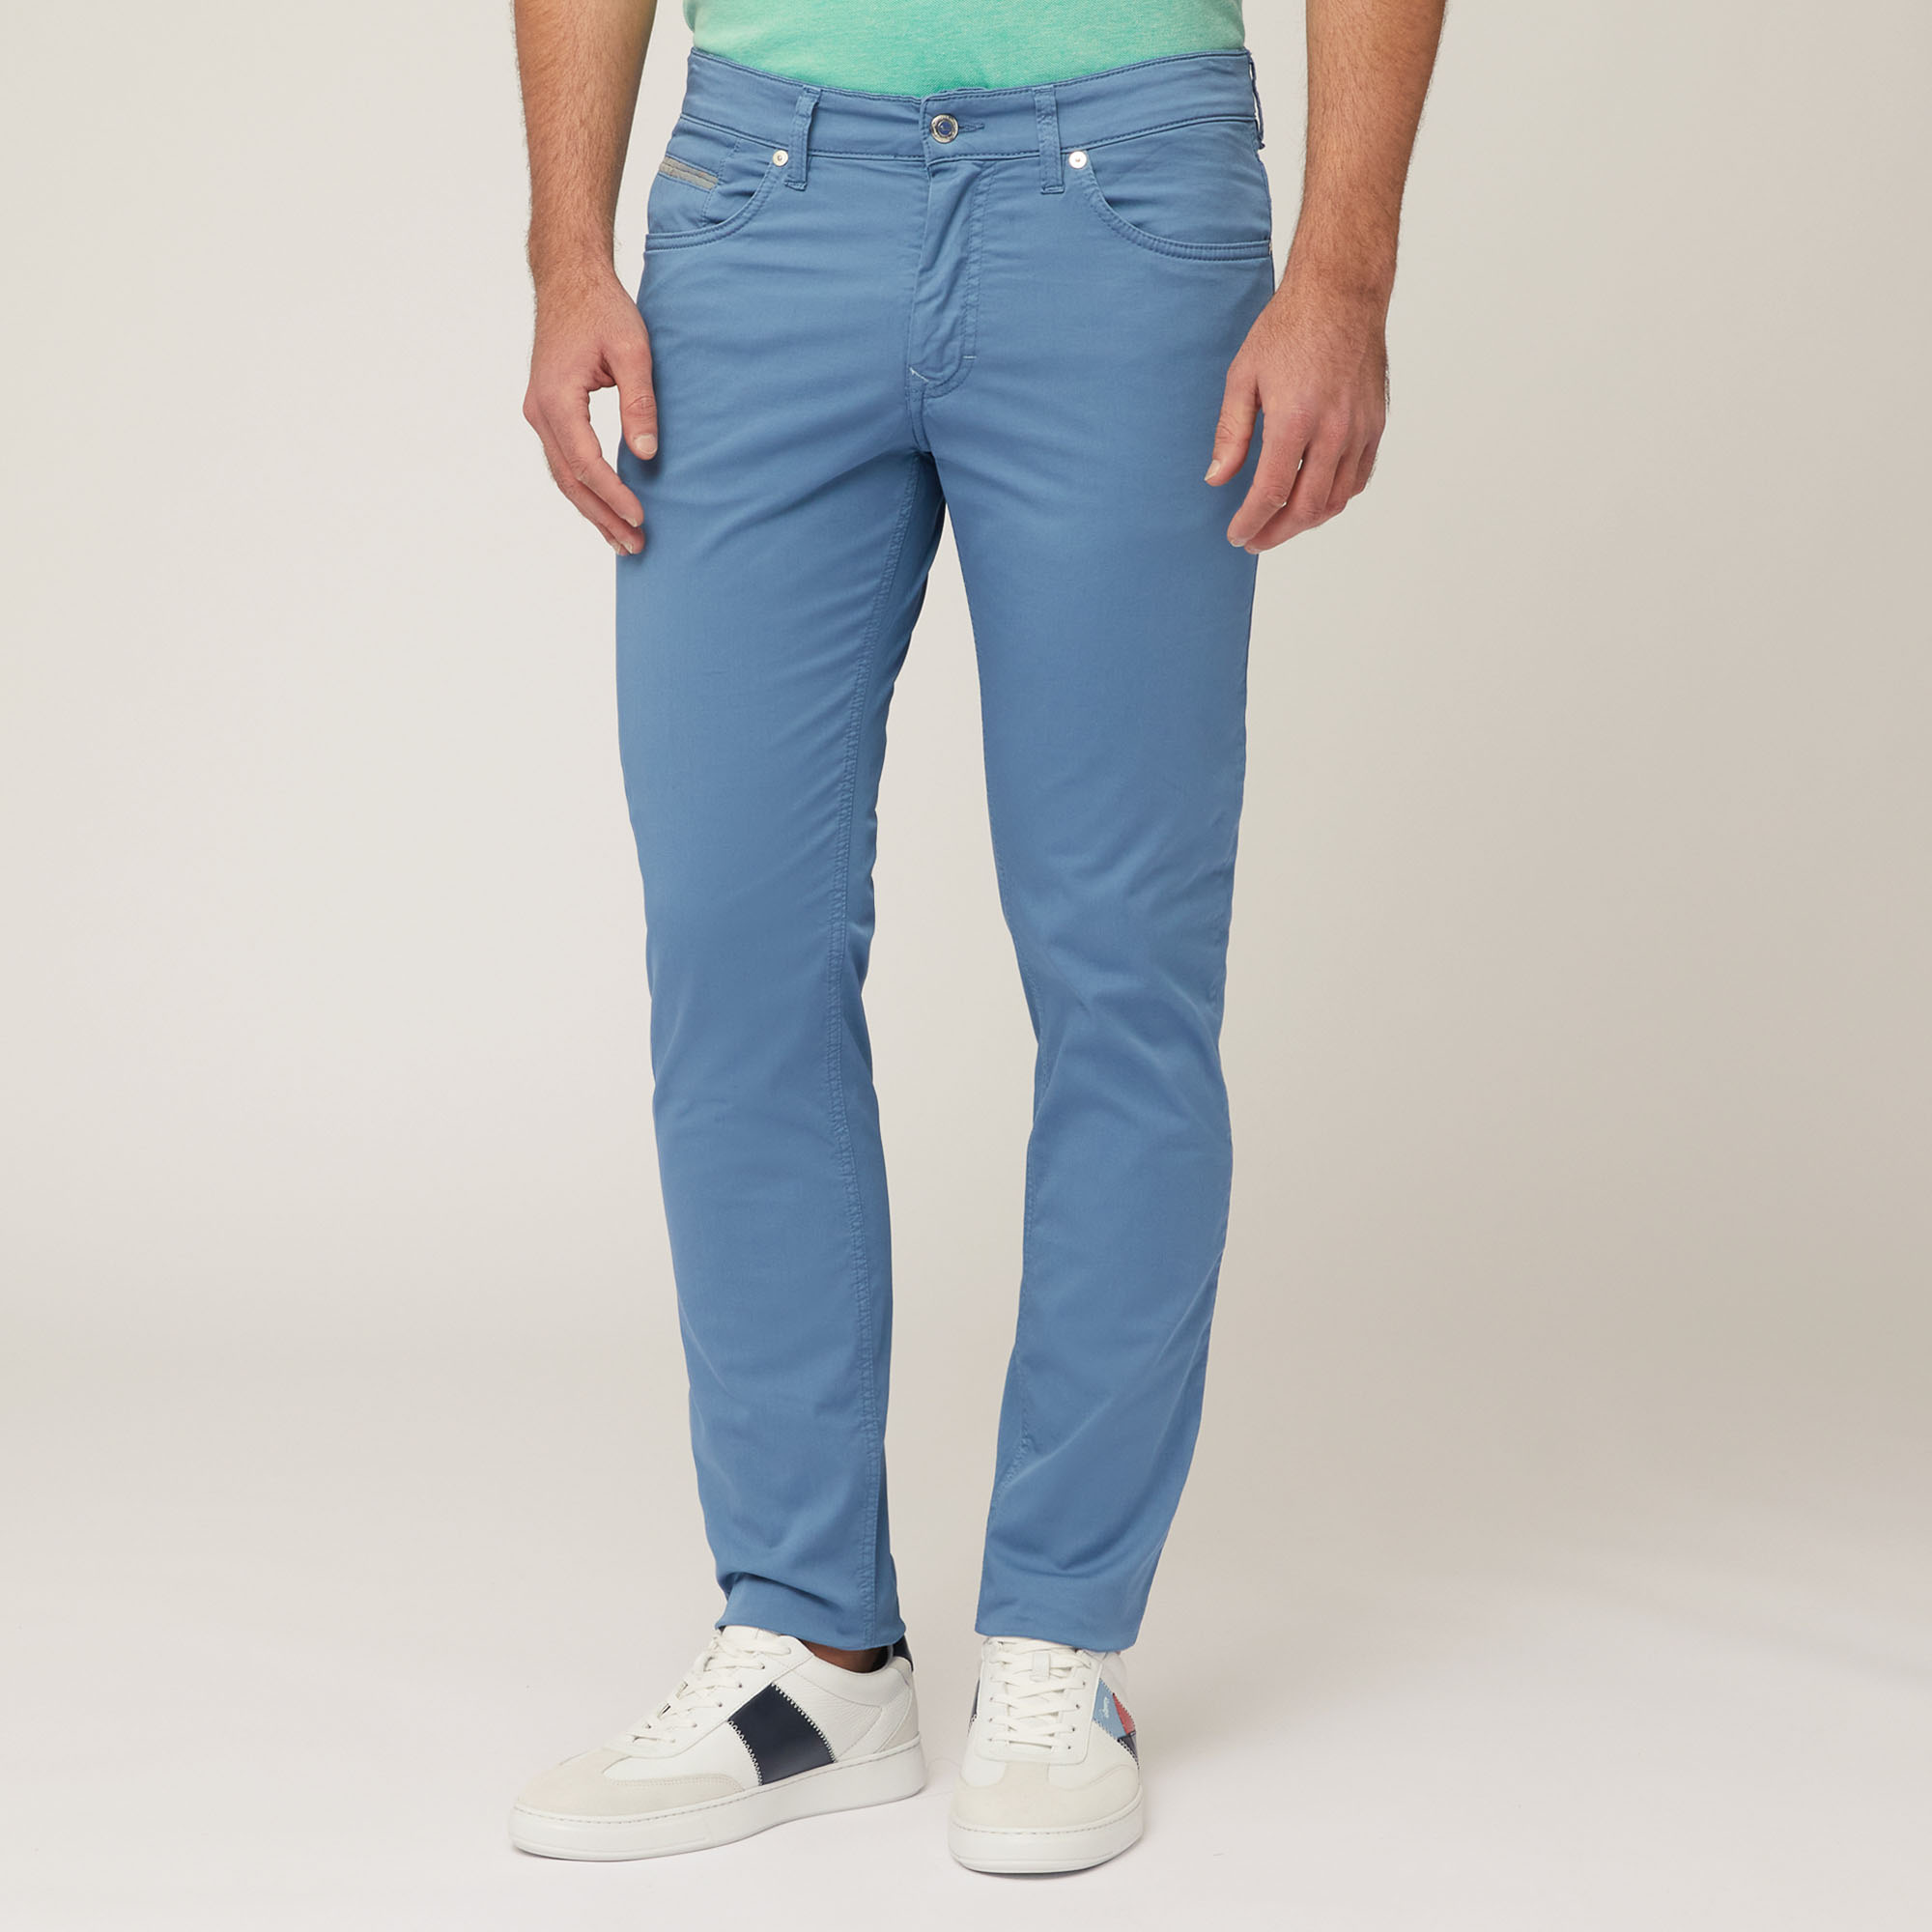 Pantaloni Con Inserti, Blu, large image number 0